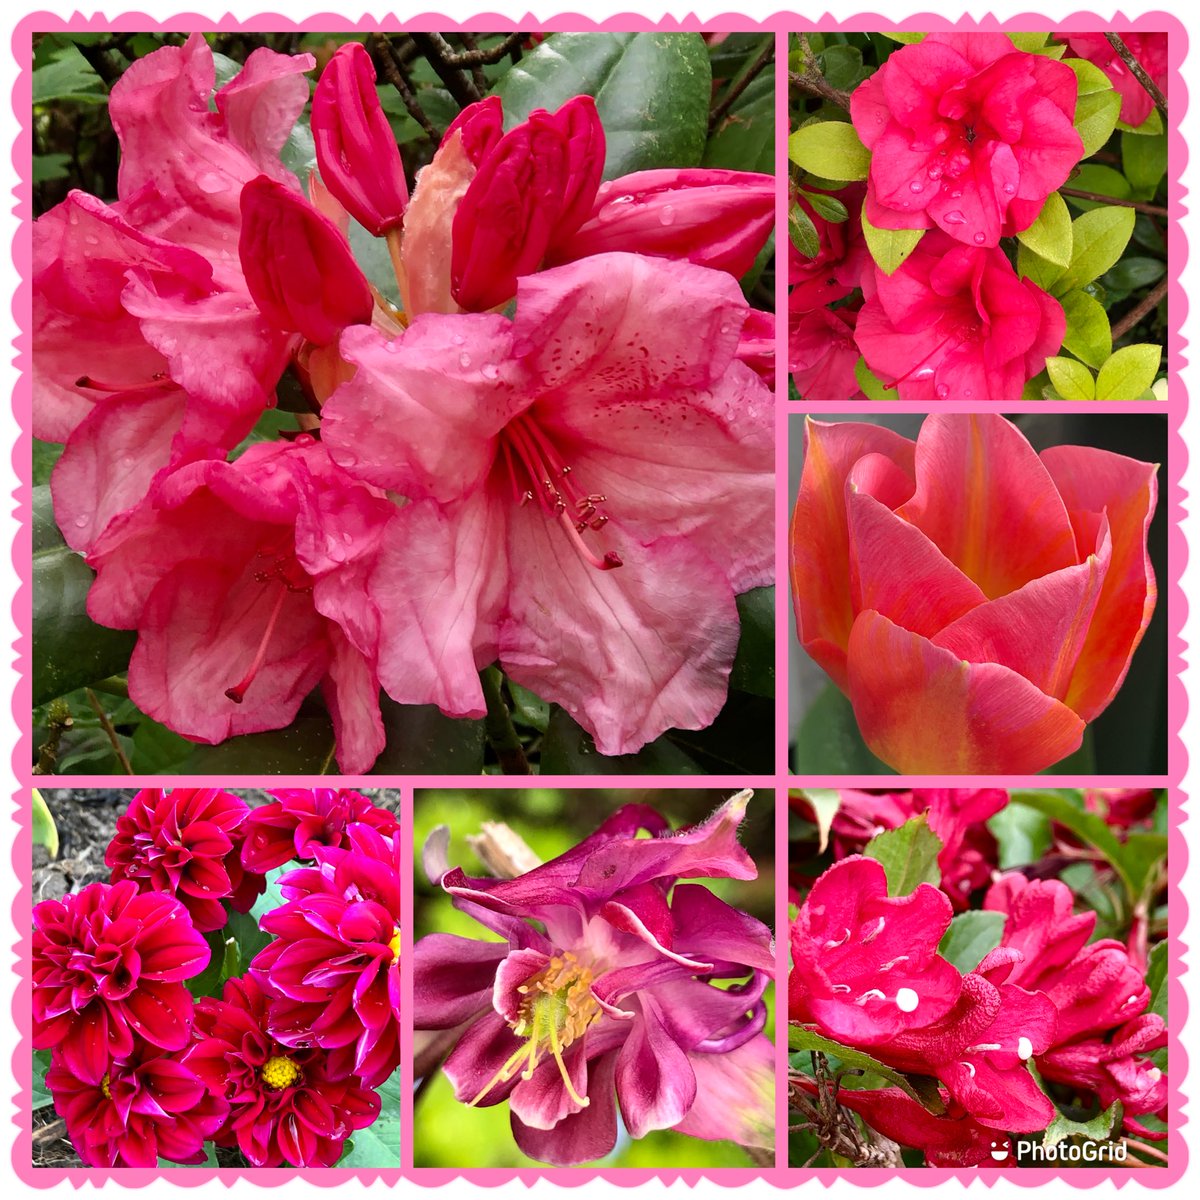 Many lovely flowers in my garden. Rhododendron is always a treat #SixOnSaturday #SaturdayMood #Flowers #Gardening #GardeningWeek #Colourful 💗💗